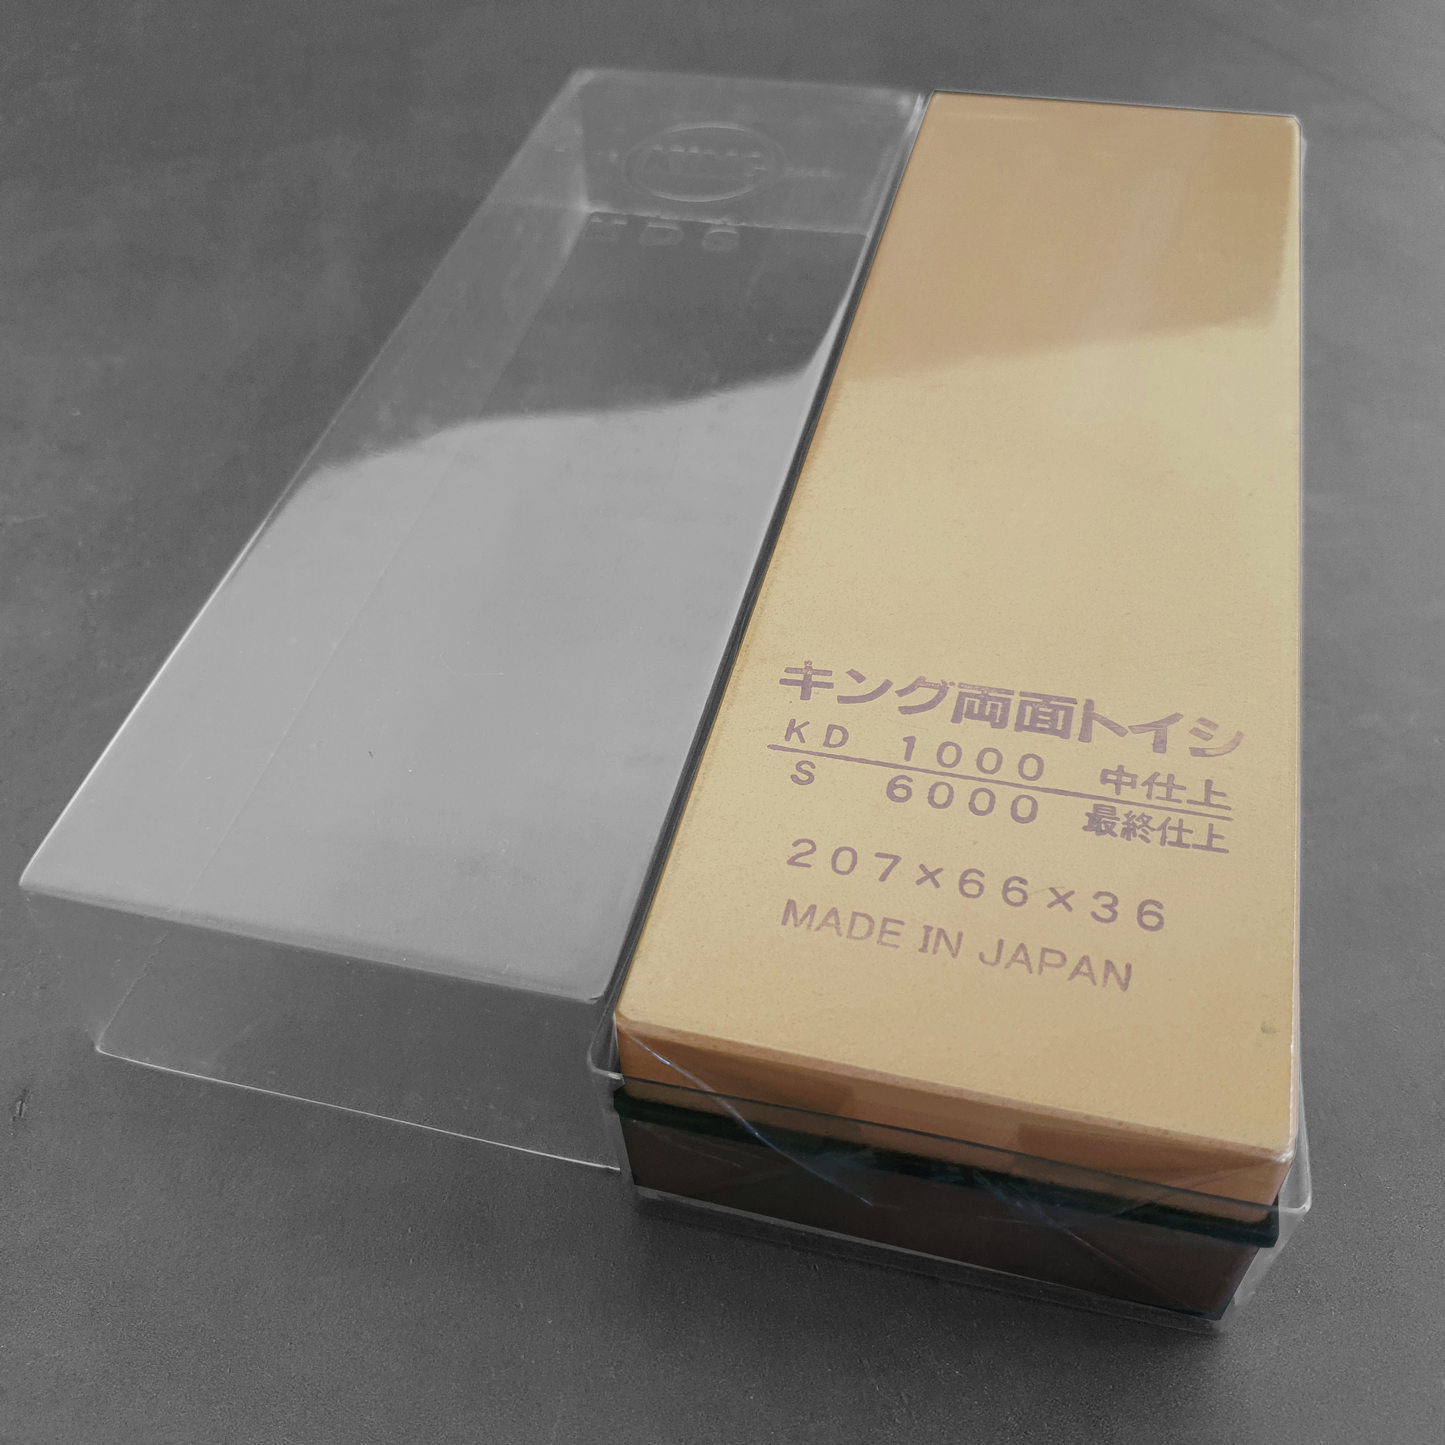 King KDS 1000 6000 Grit Sharpening and Polishing Stone Whetstone Box Packaging Singapore